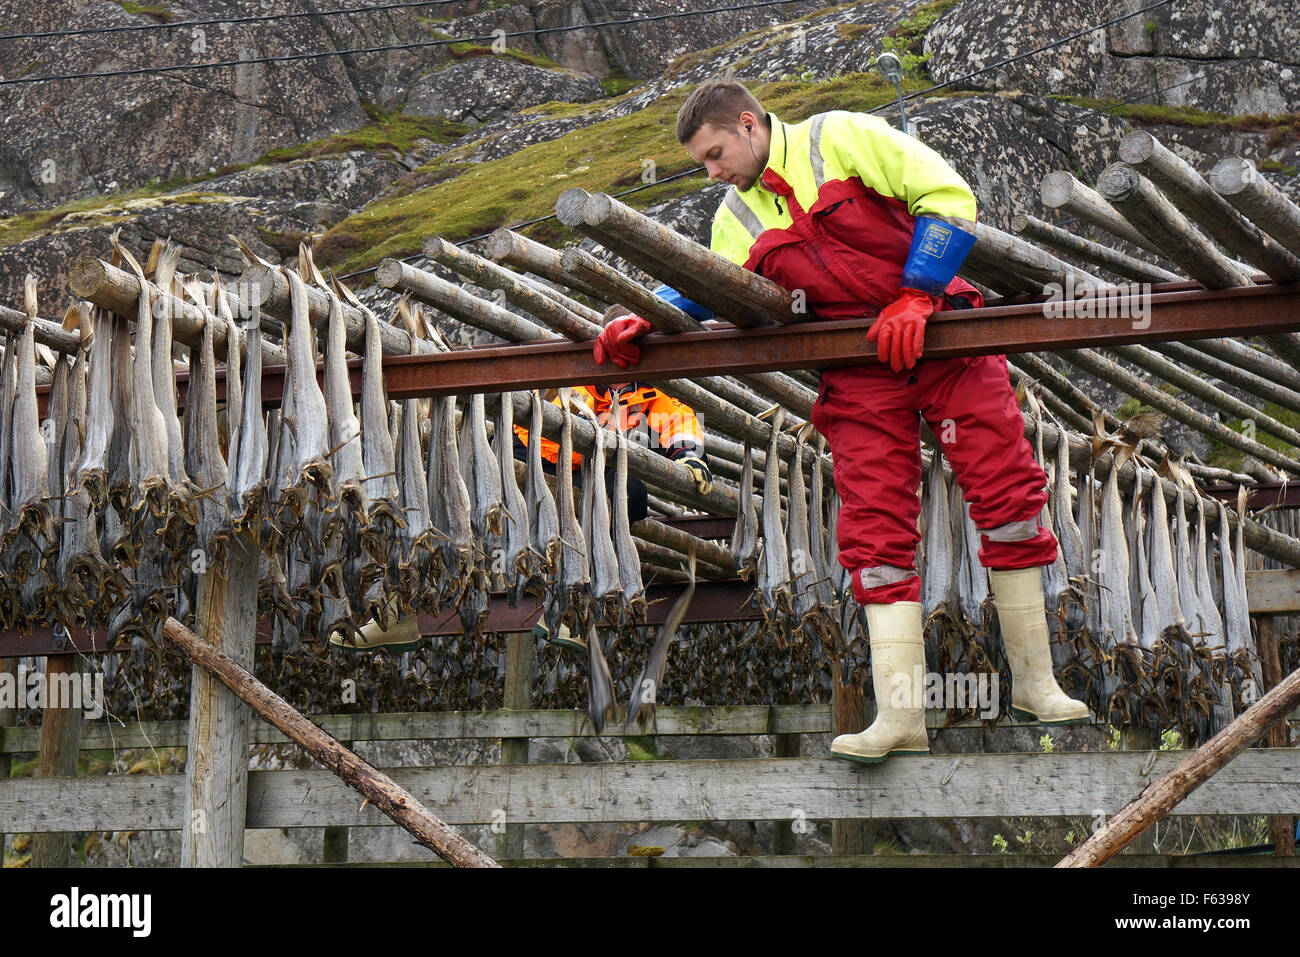 Stockfish harvest, Vestvagøya, Lofoten Islands, Norway. Stock Photo